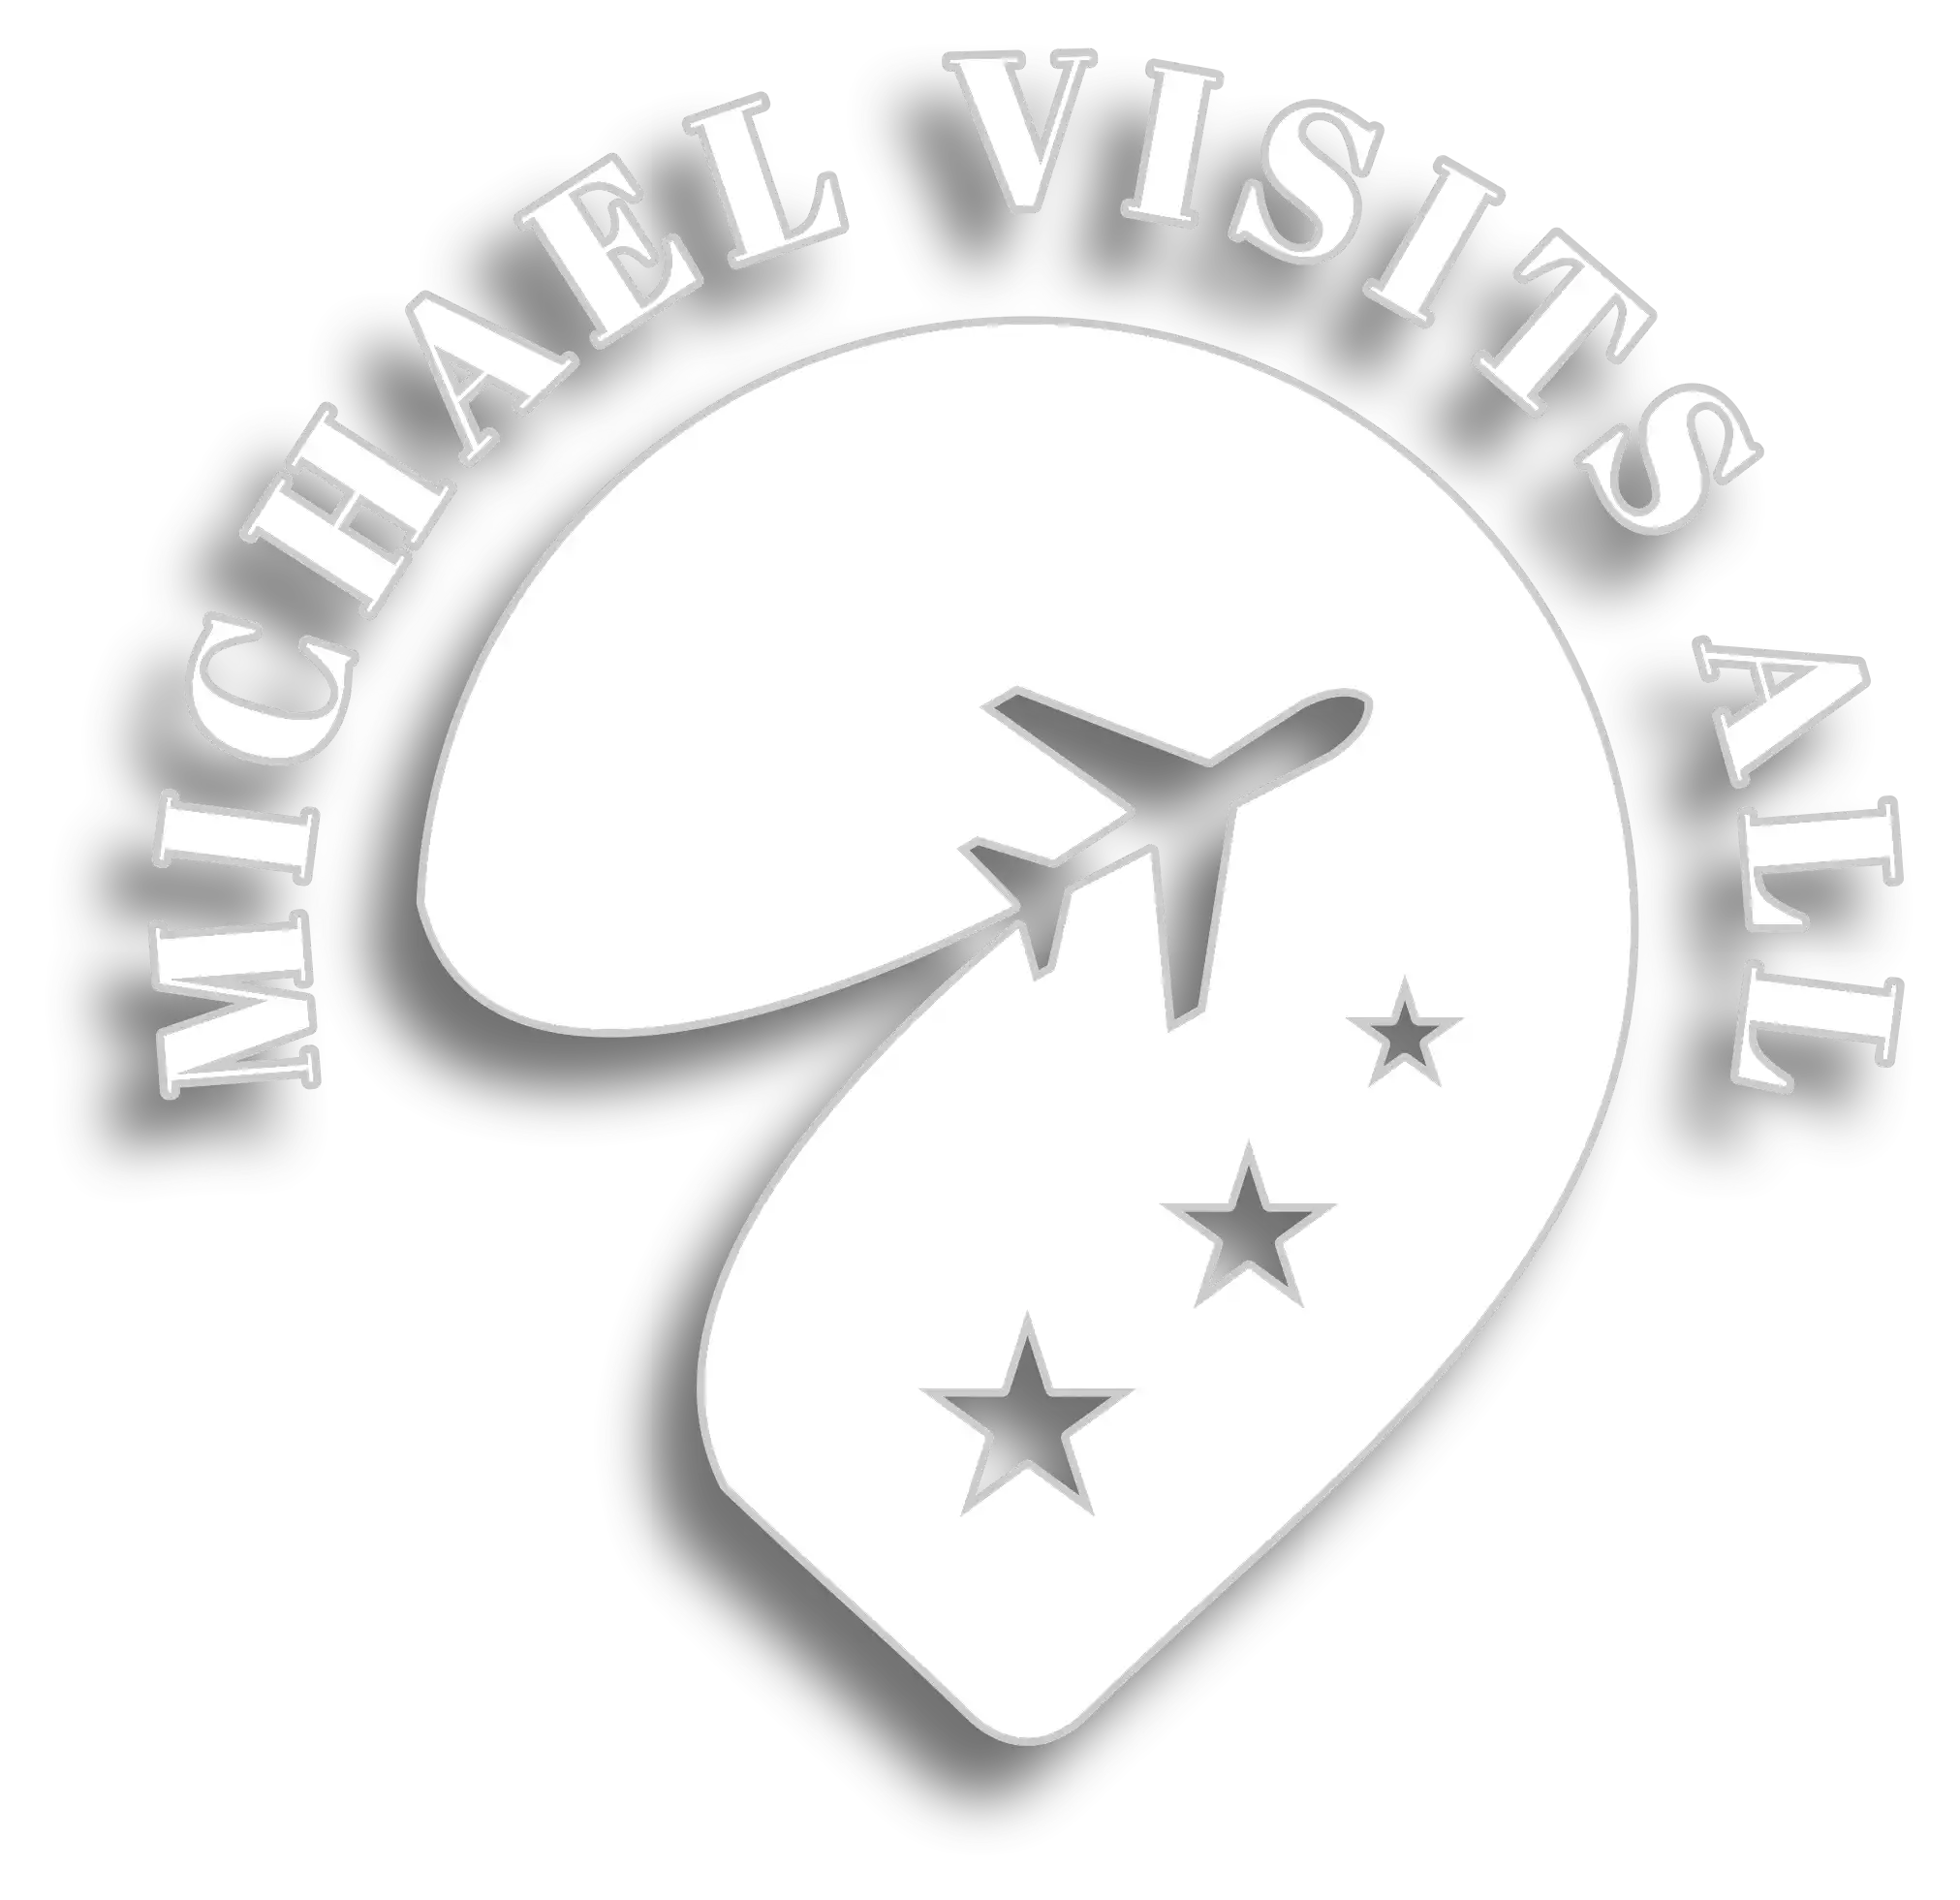 Michael Visits All site logo